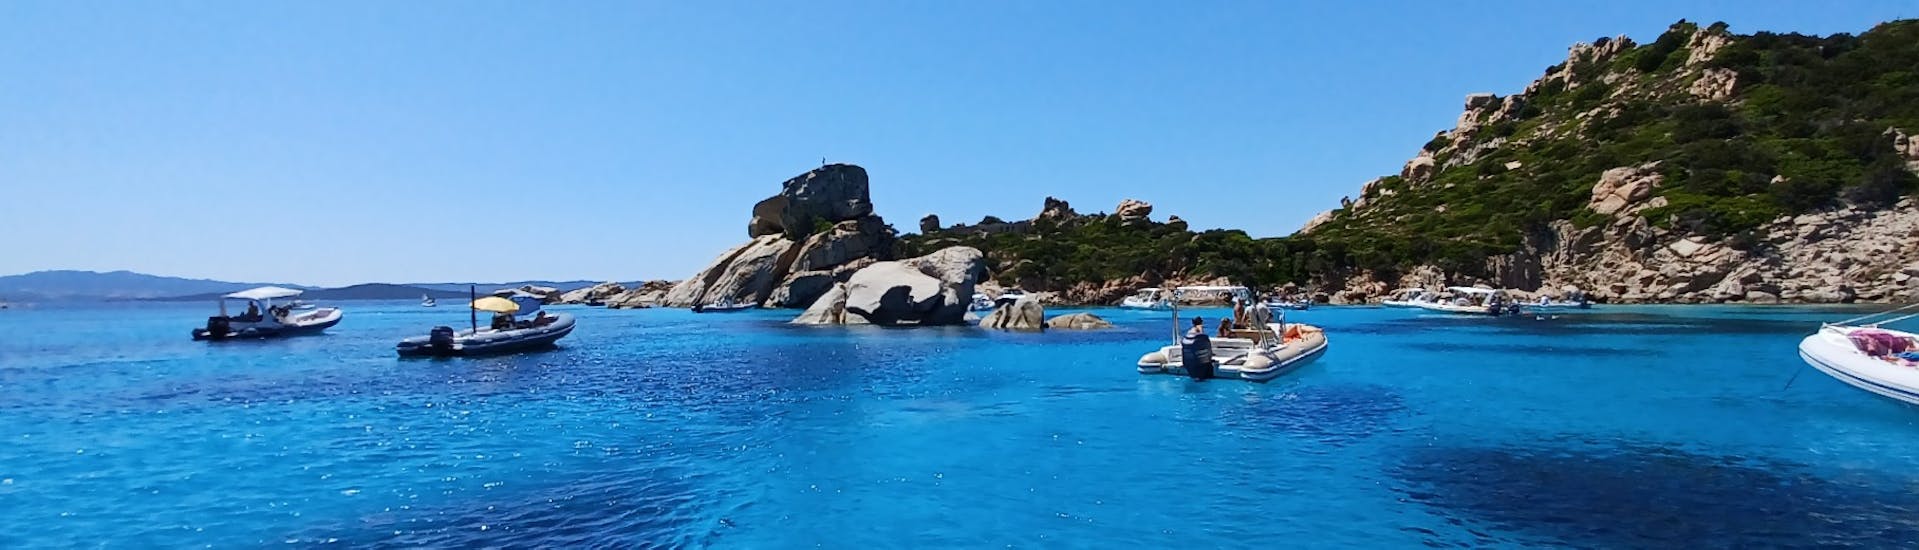 Photo de l'archipel de La Maddalena prise lors de la Balade privée en bateau à l'archipel de La Maddalena avec Snorkeling avec La Maddalena Boat Charter.